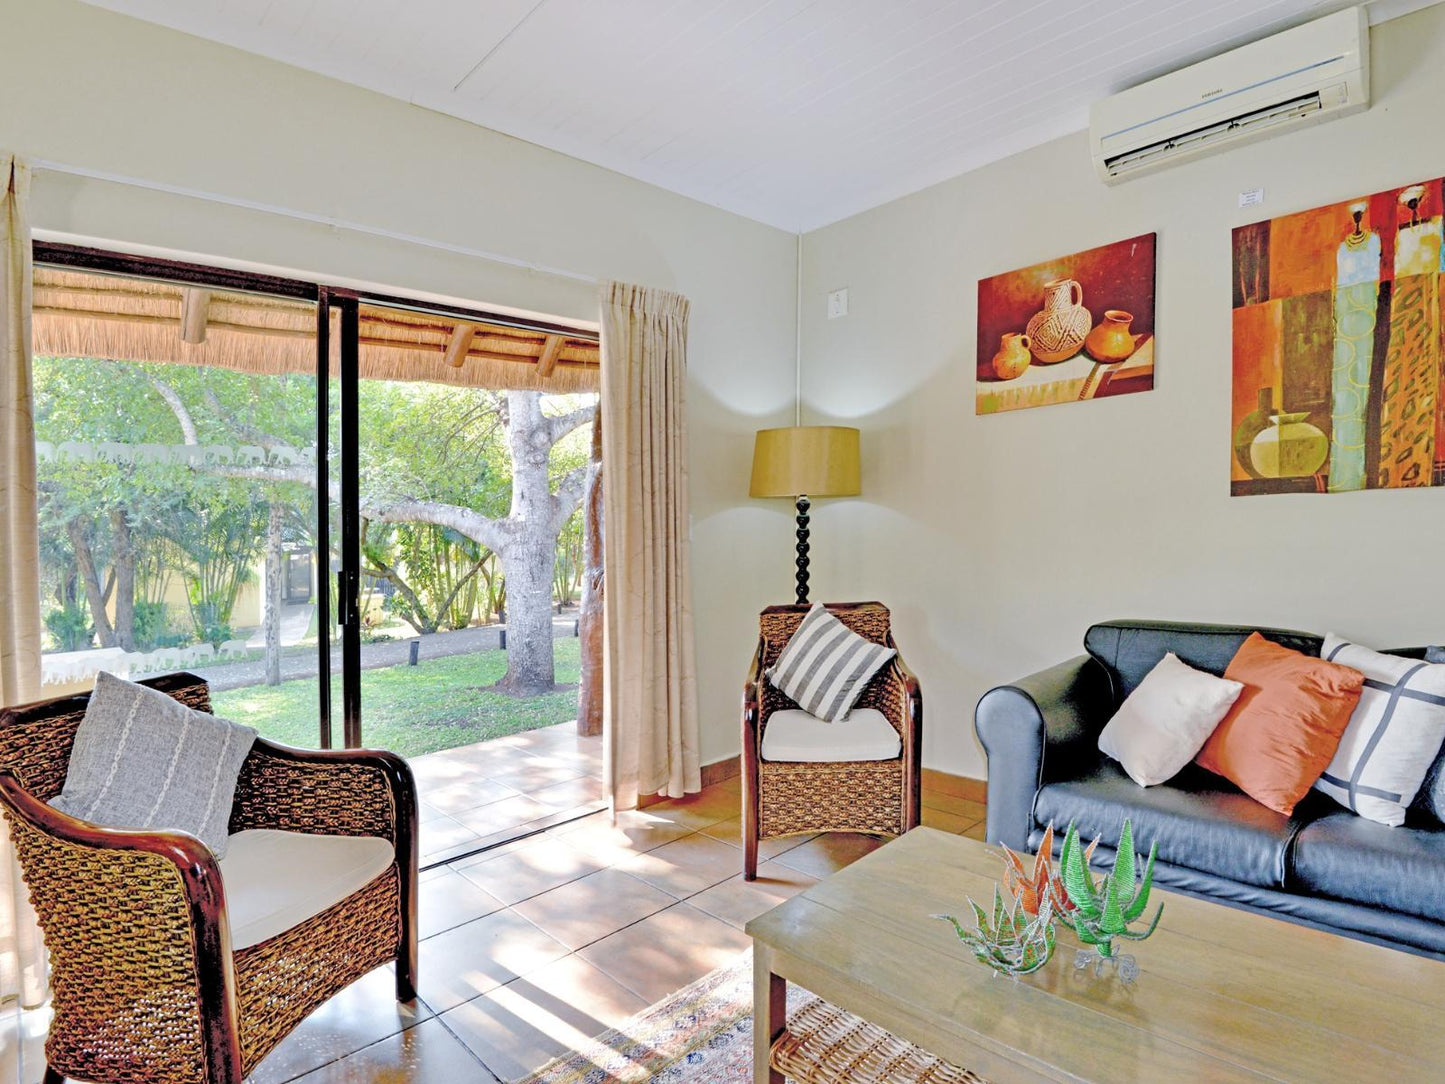 Luxury 2 bedroom Cottage @ Komati River Chalets